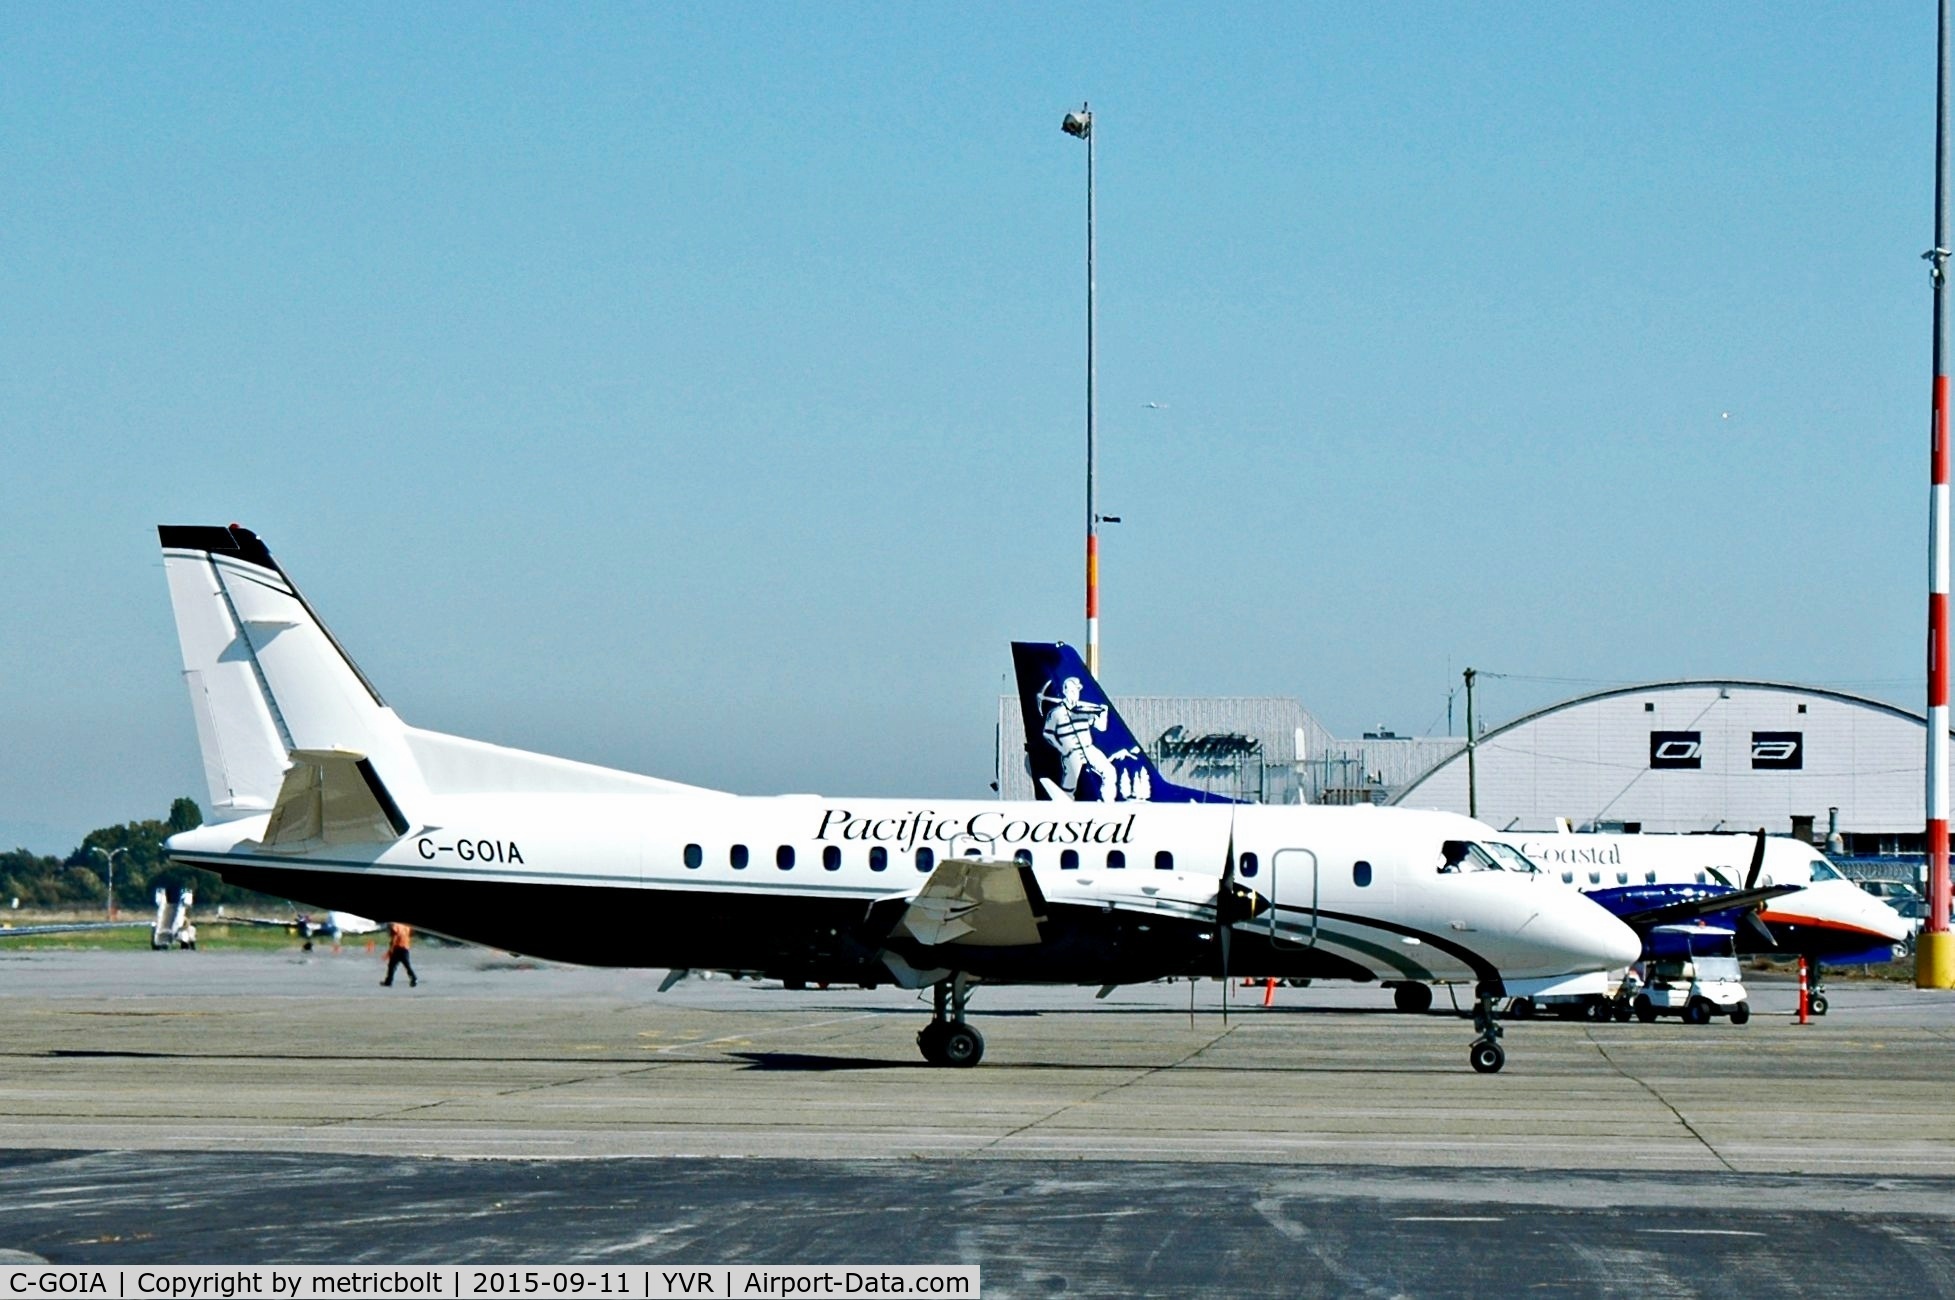 C-GOIA, 1993 Saab 340B C/N 340B-347, Now with Pacific Coastal titles.